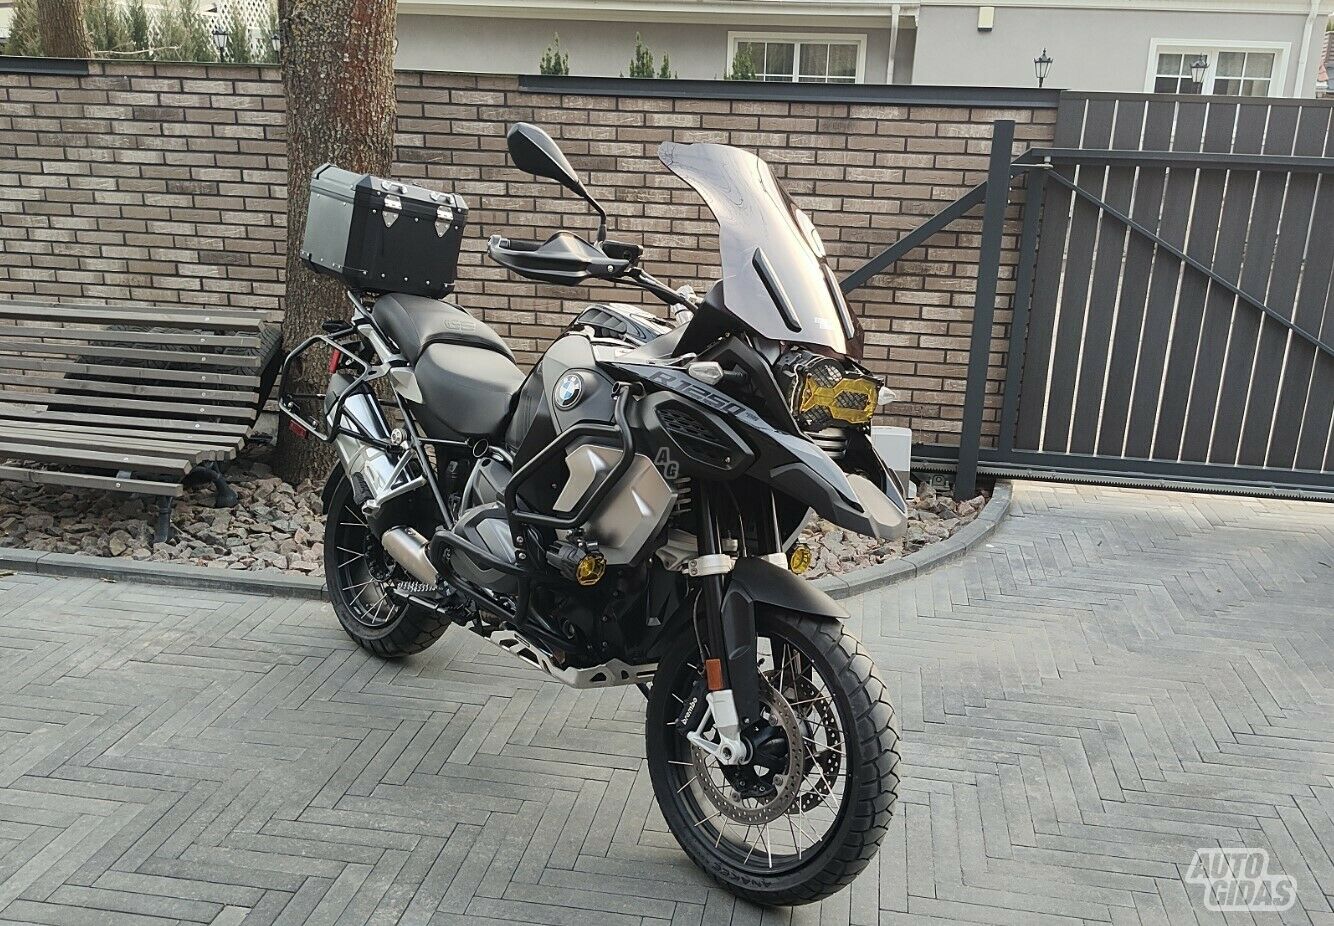 BMW GS 2021 y Enduro motorcycle